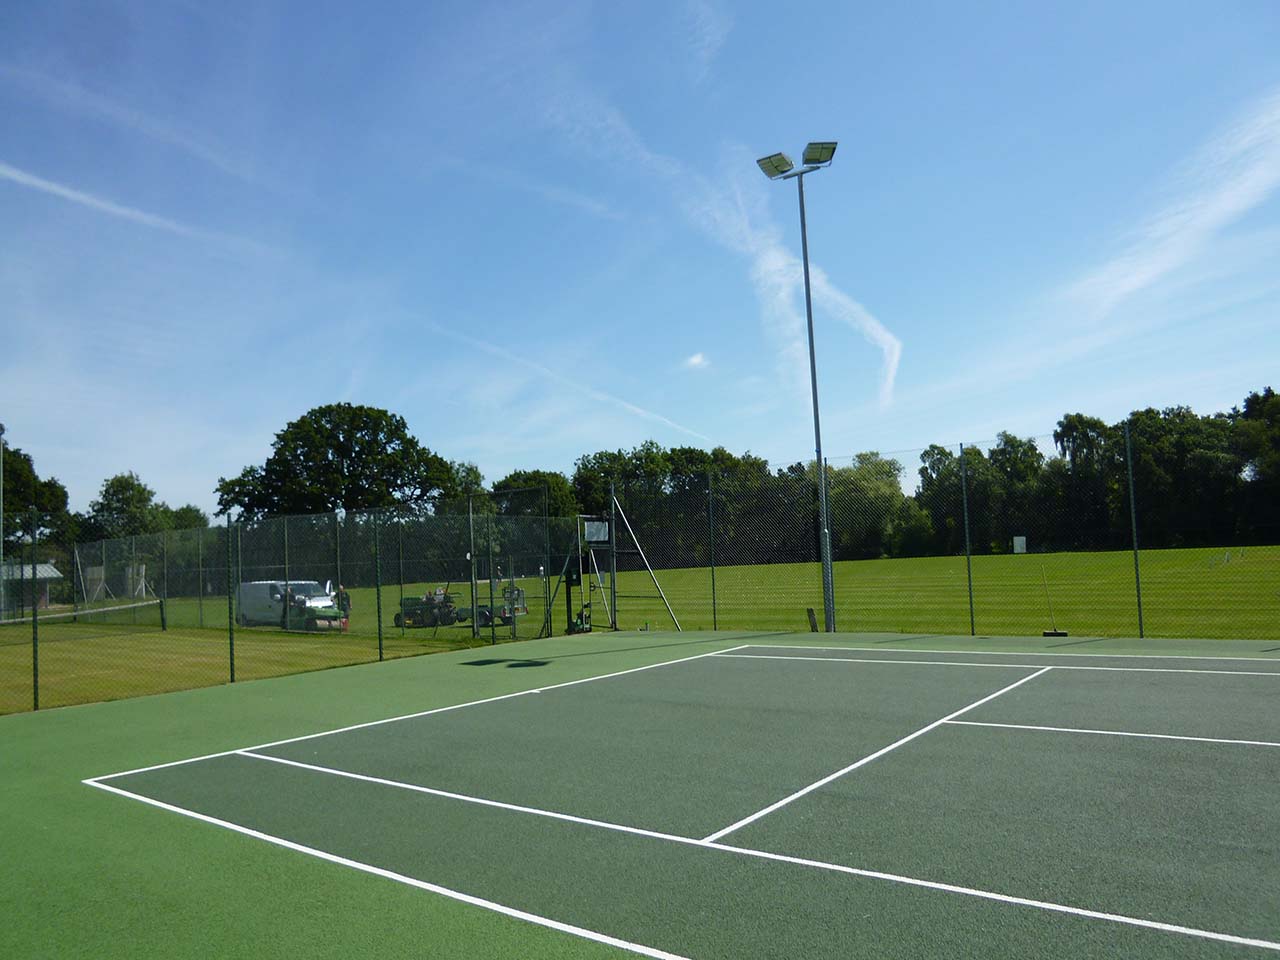 Cringleford Tennis Club